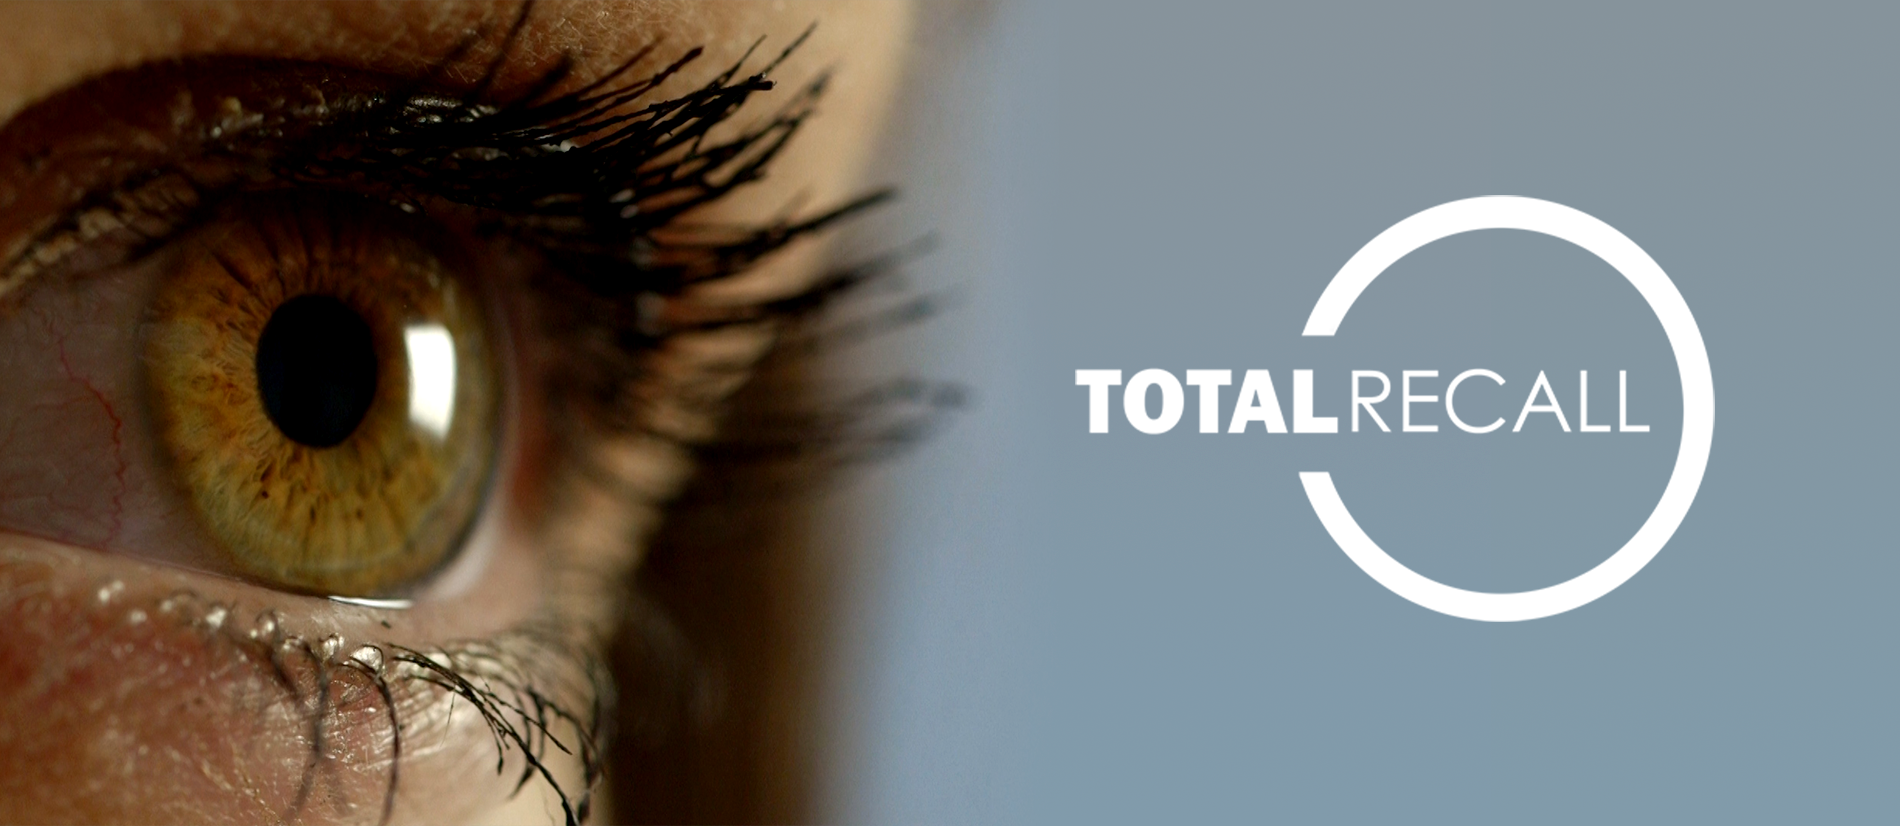 Total Recall eye